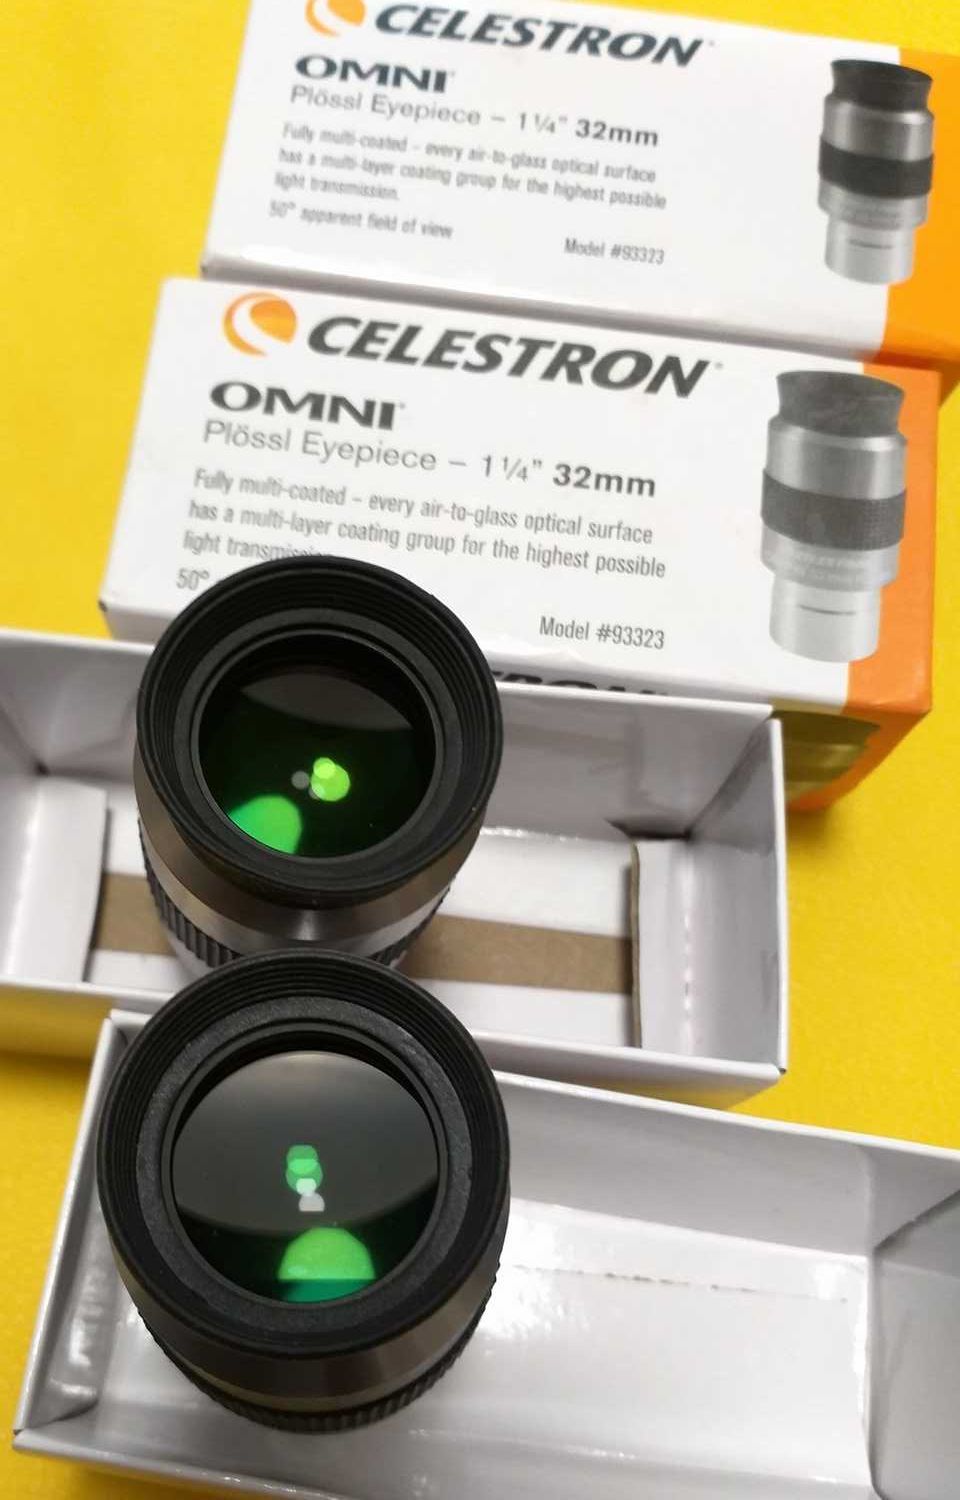 окуляры пара 32мм 1.25" Celestron Onmi плёссл для телескопов